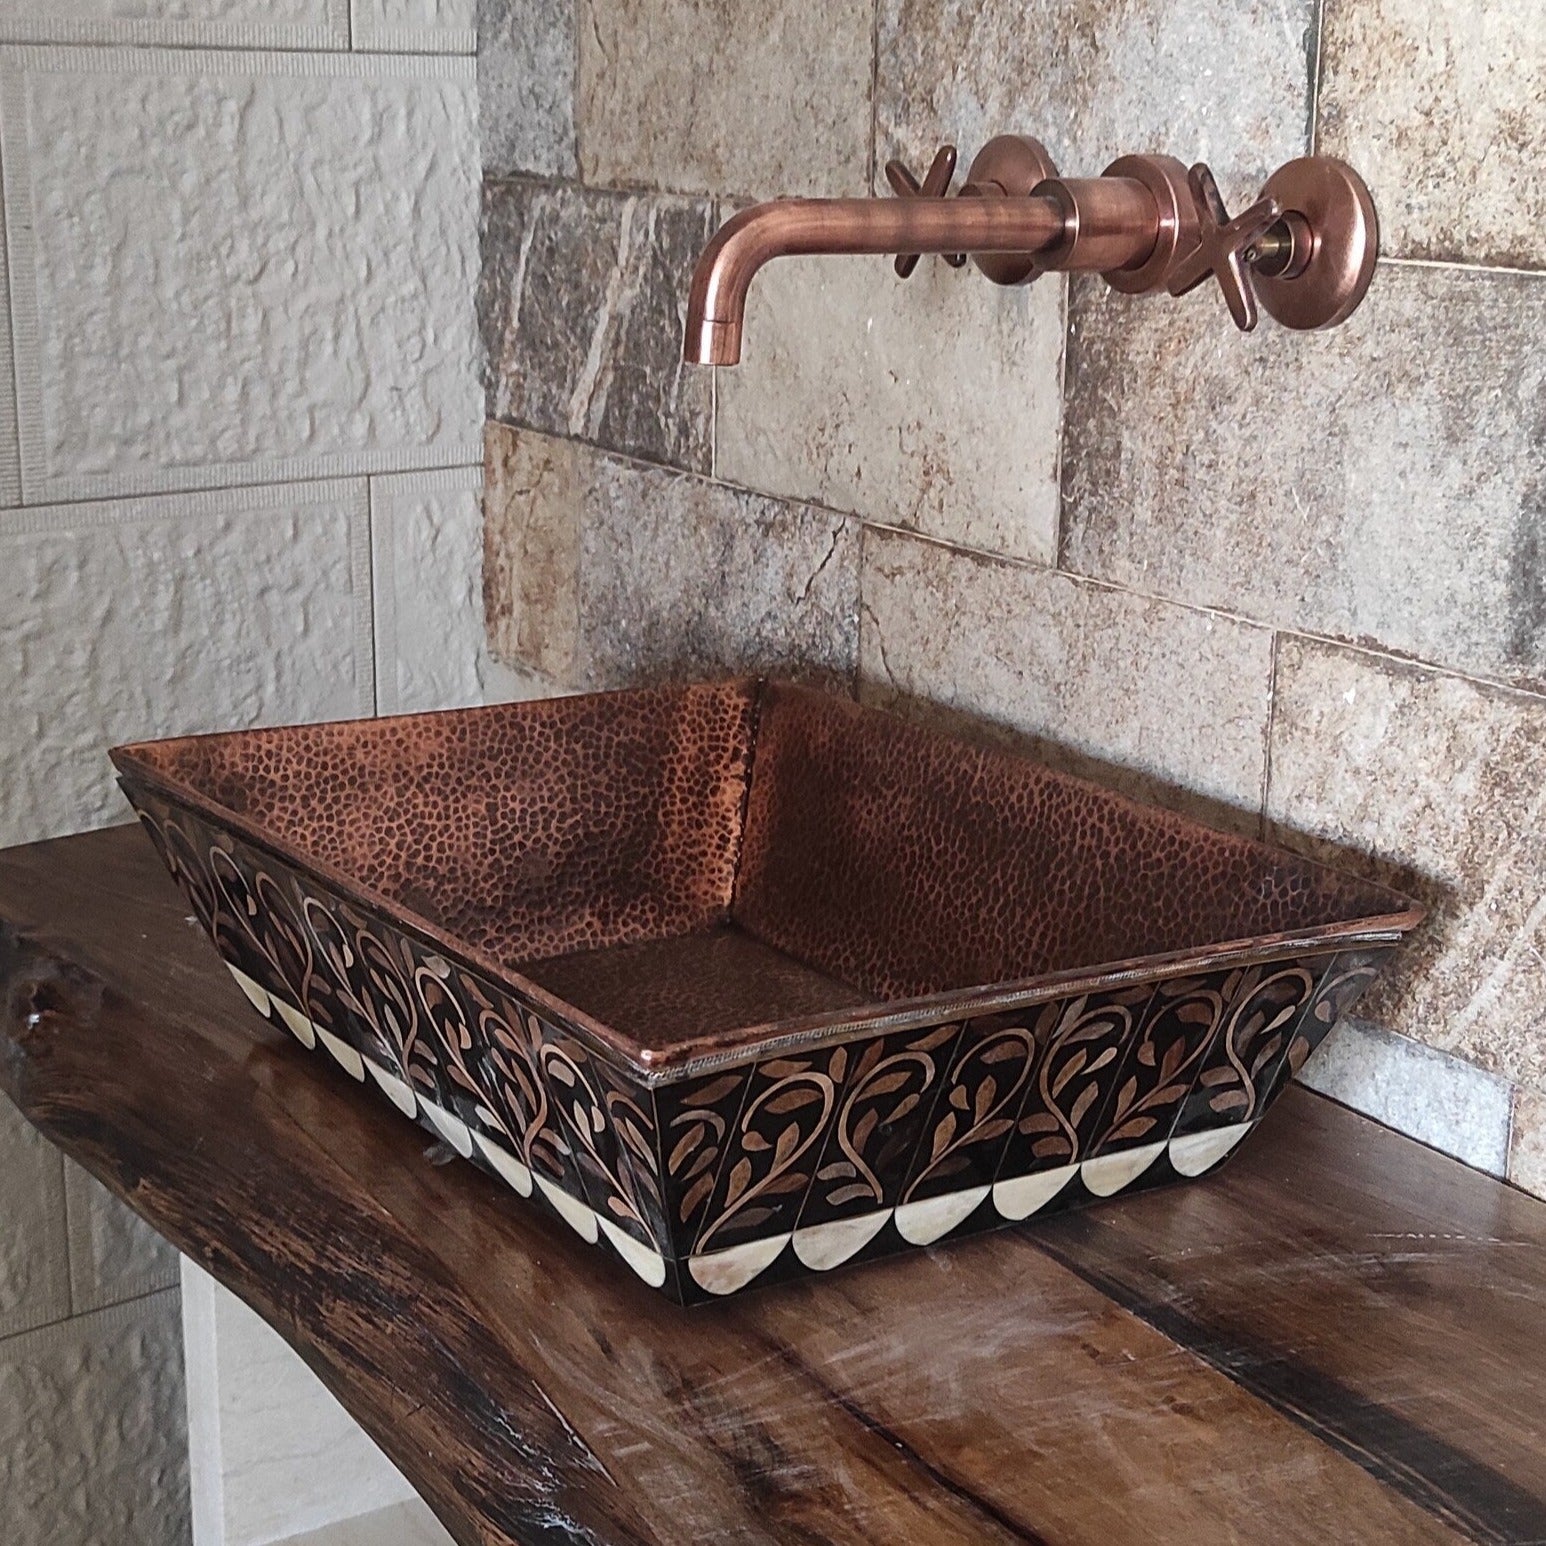 Antique Copper Sink - Farmhouse Vessel Sink - Bar Sink